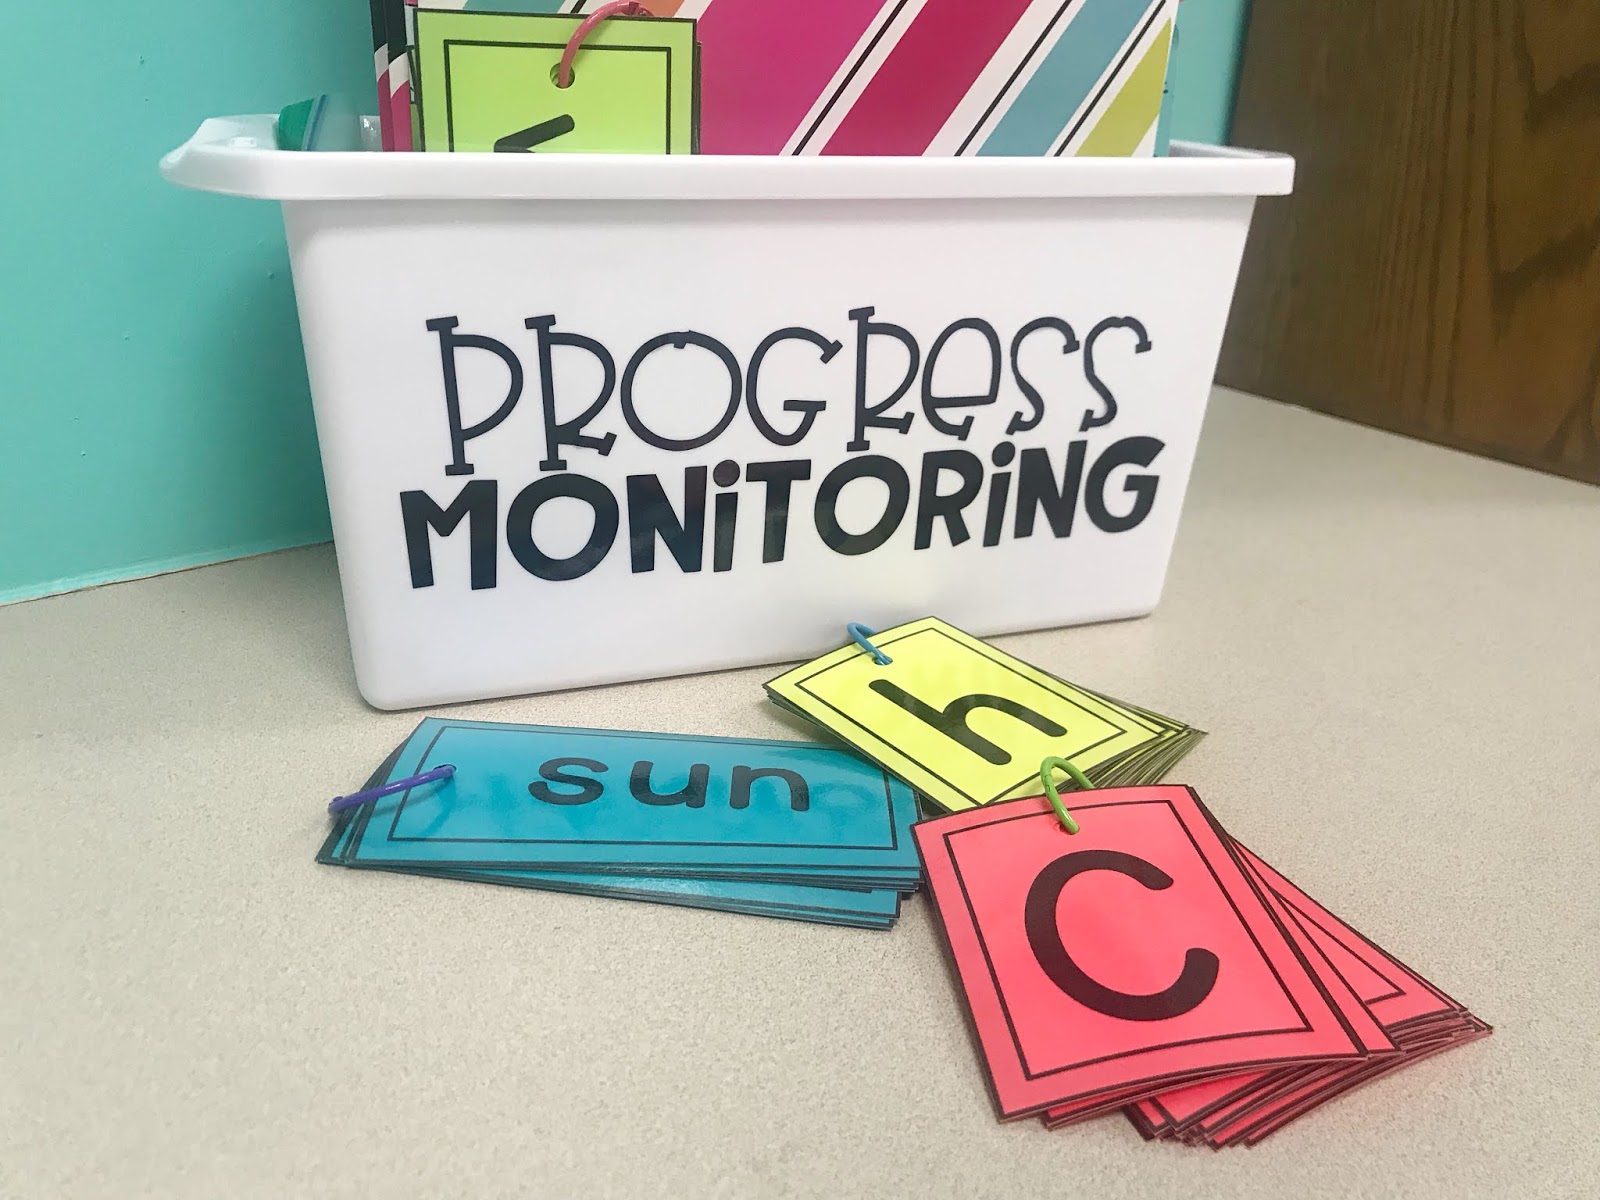 Progress Monitoring cards and tub with text "Progress Monitoring"